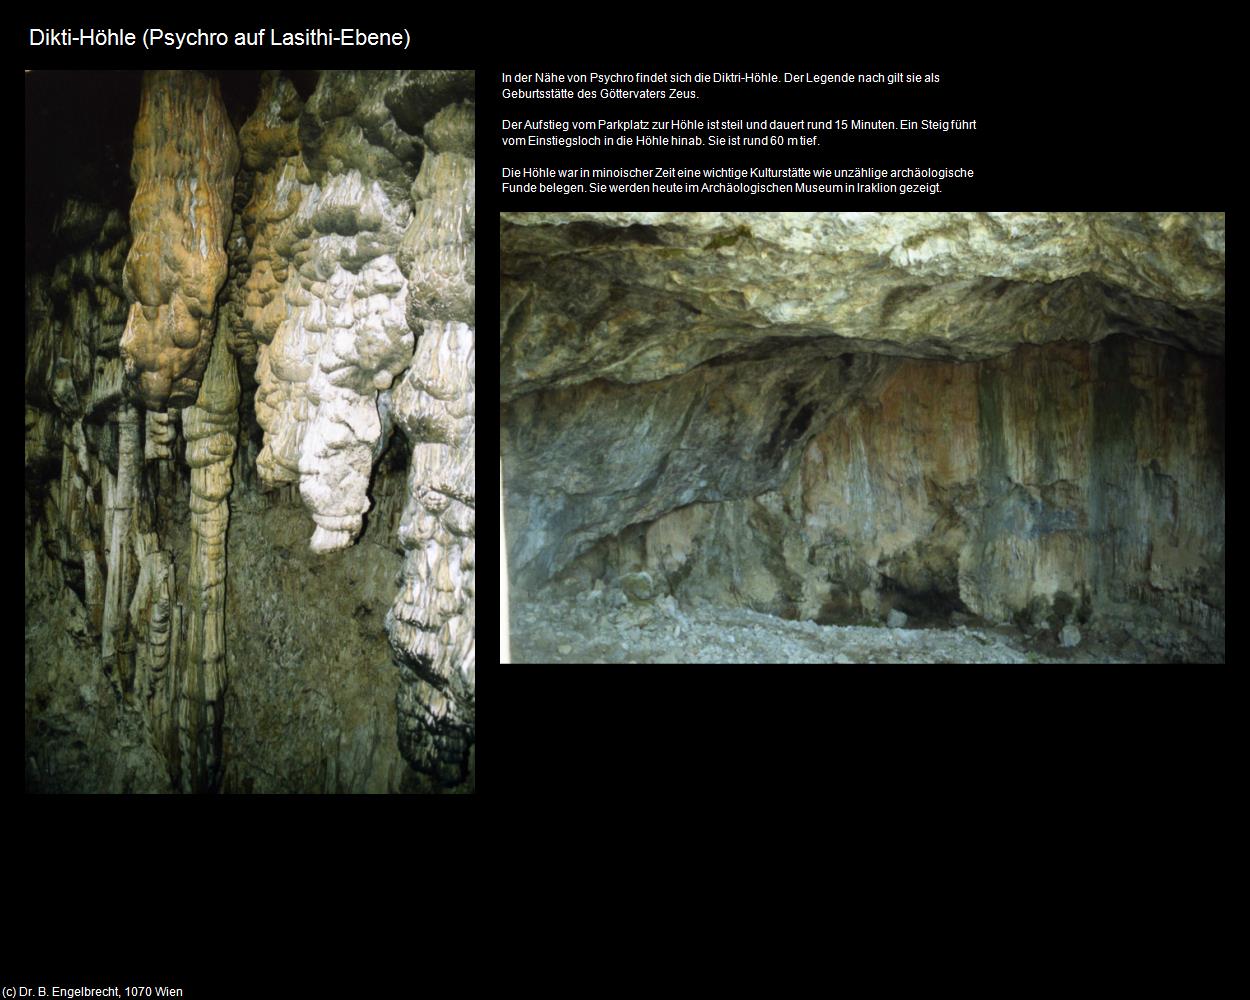 Dikti-Höhle (Psychro) (Lasithi-Ebene) in KRETA und SANTORIN